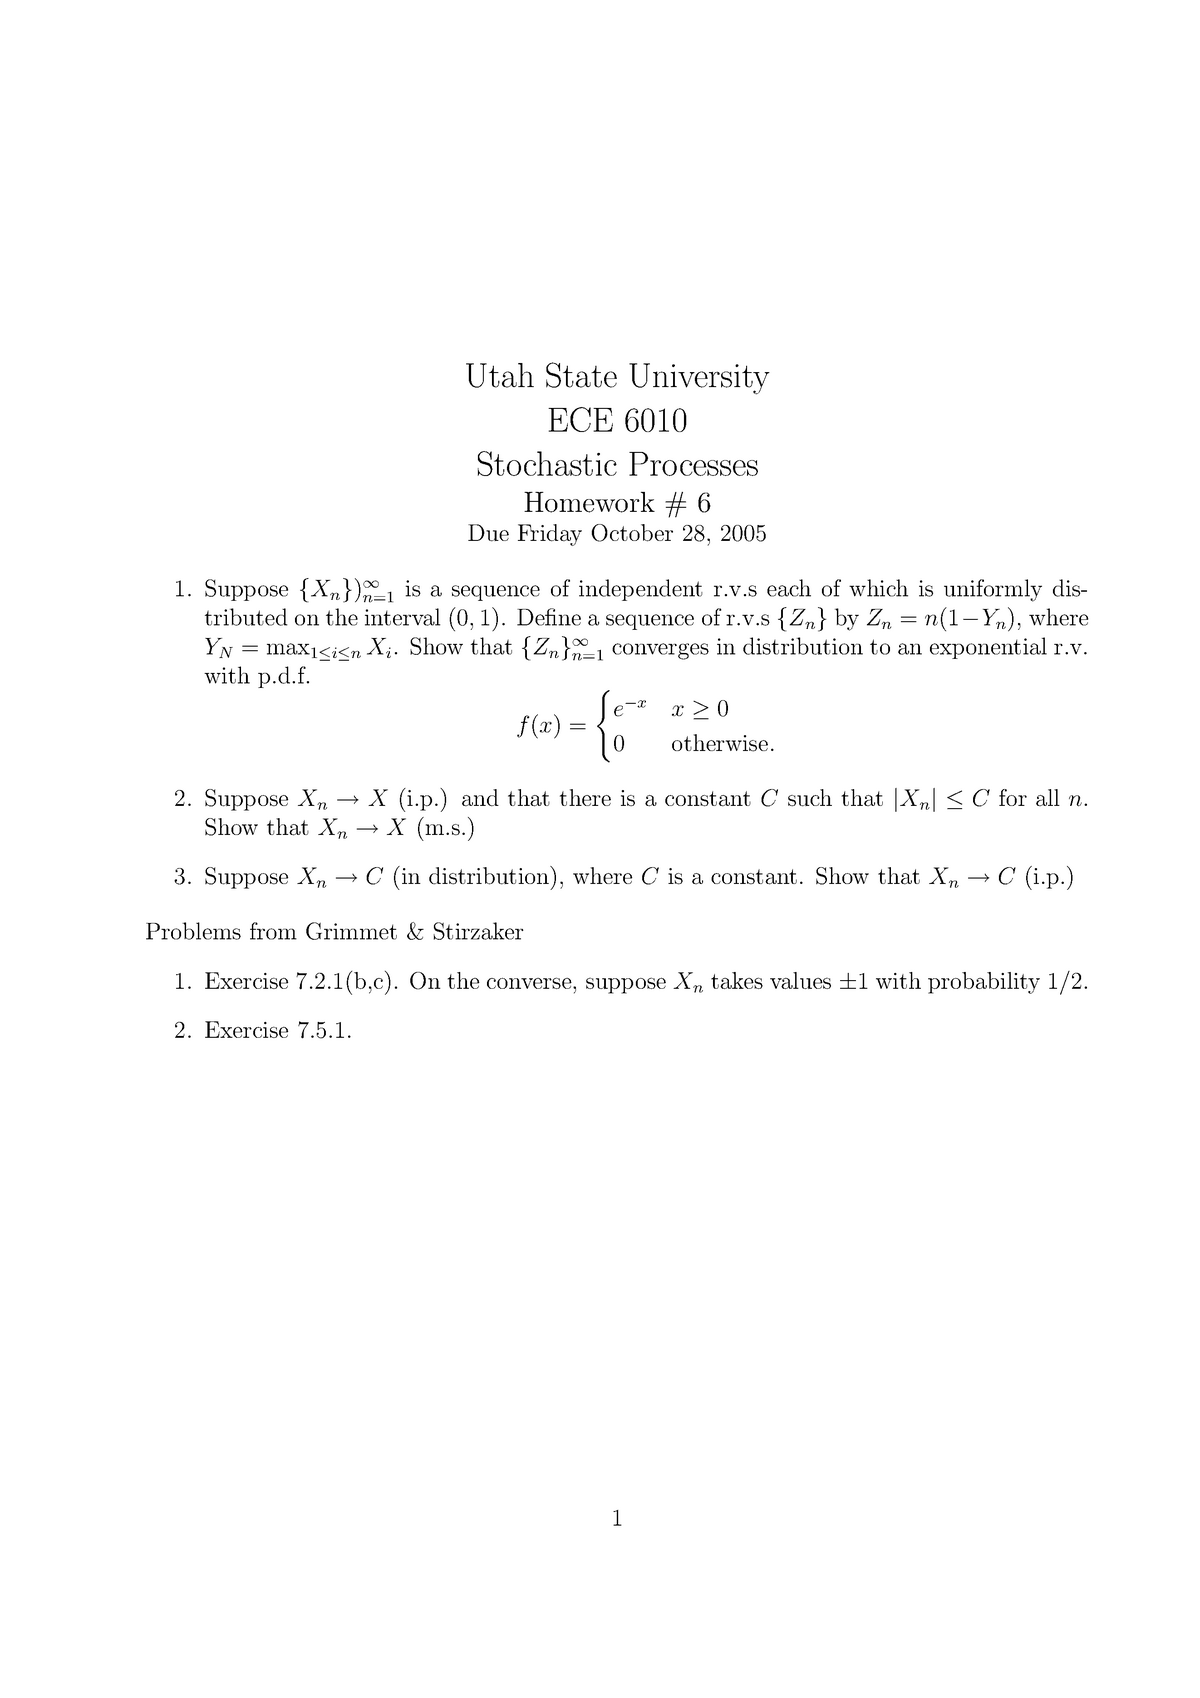 homework-6-spring-2006-utah-state-university-ece-6010-stochastic-processes-homework-6-due